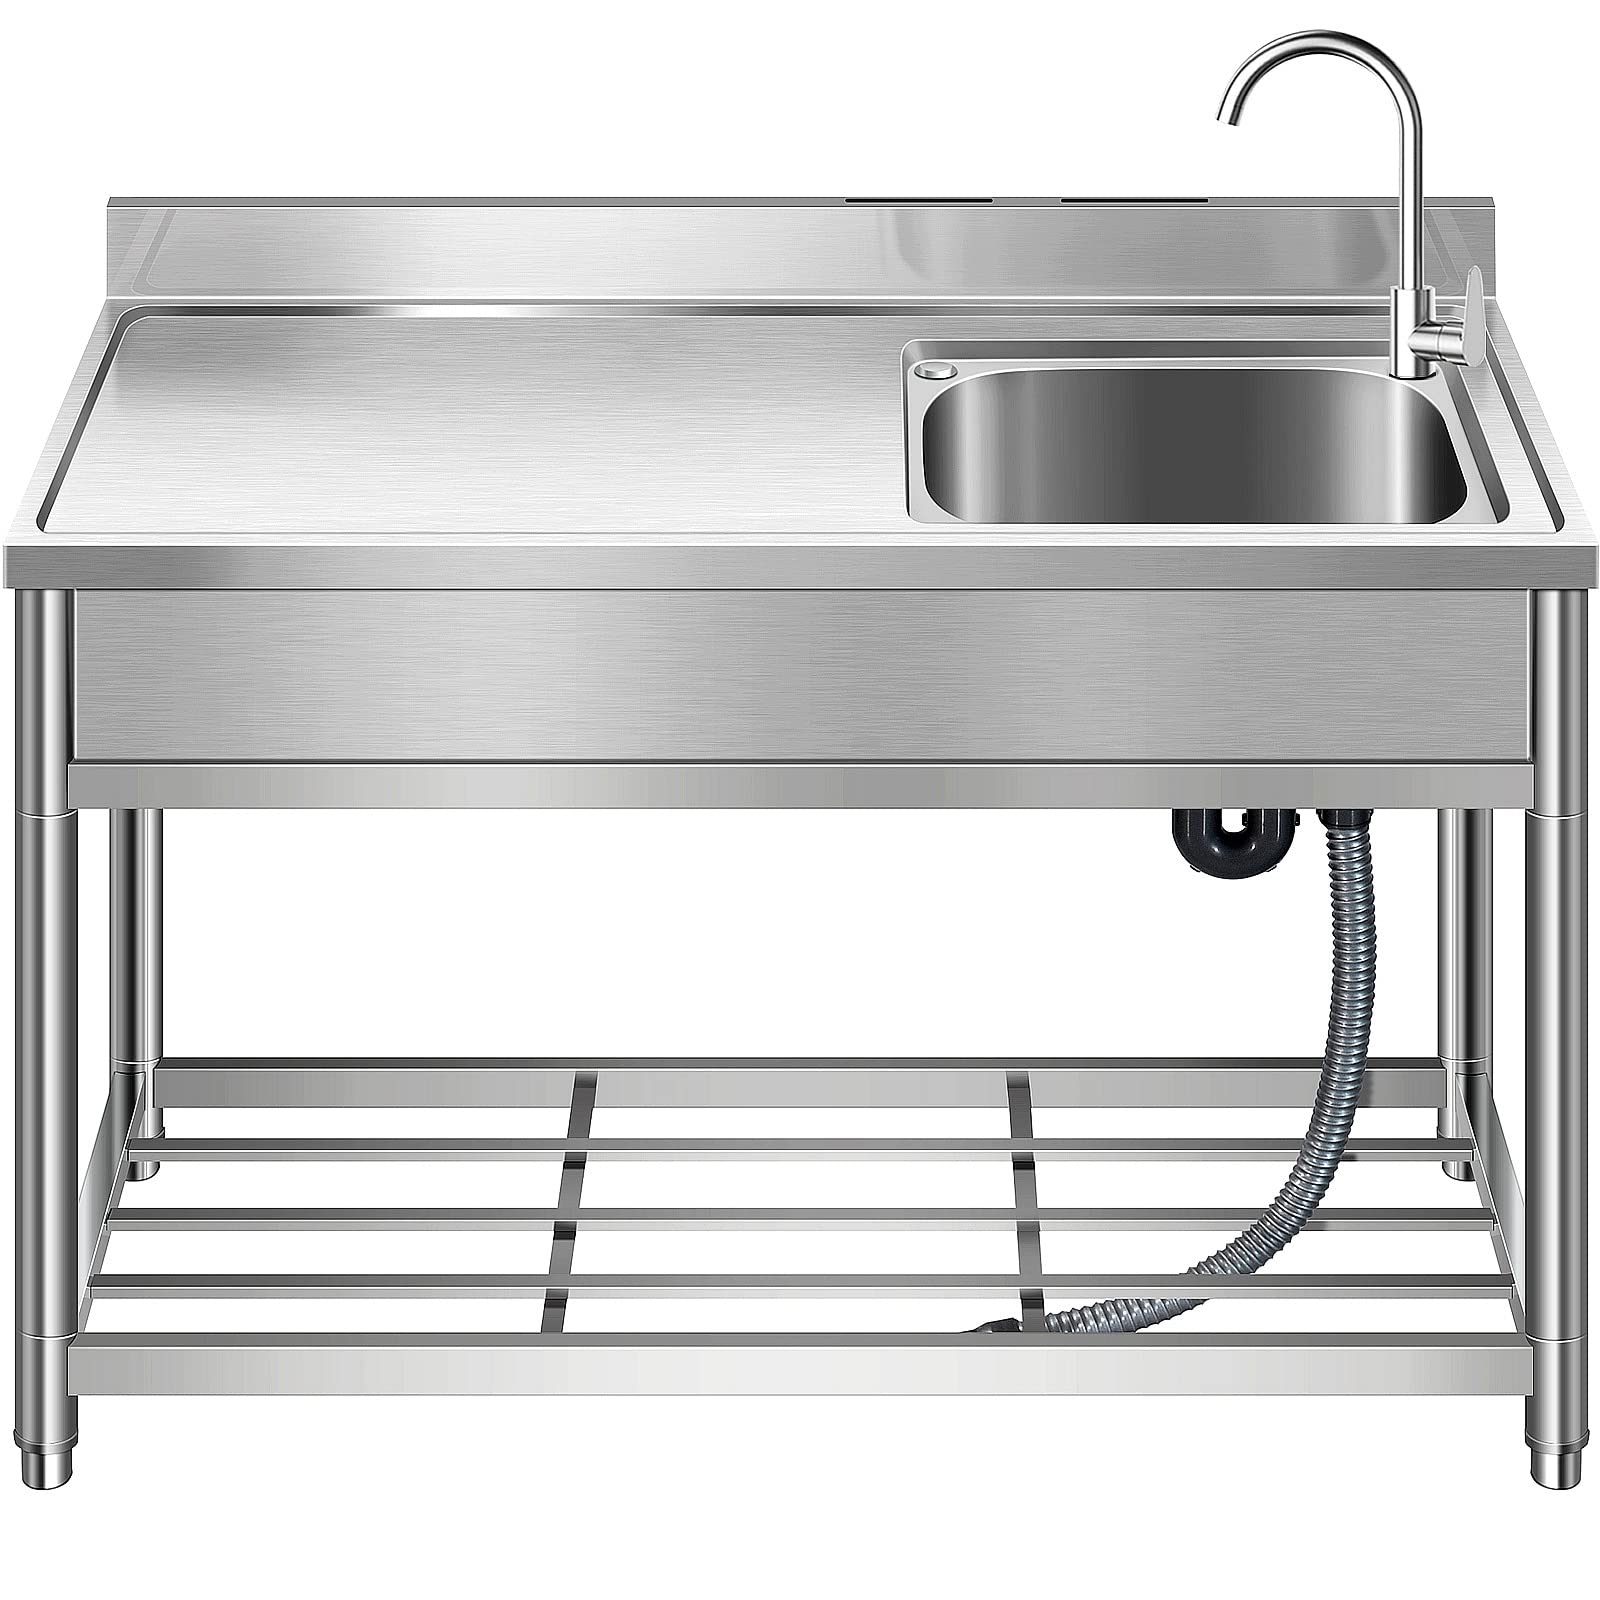 KINGBO Free Standing Stainless-Steel Single Bowl Sink Set